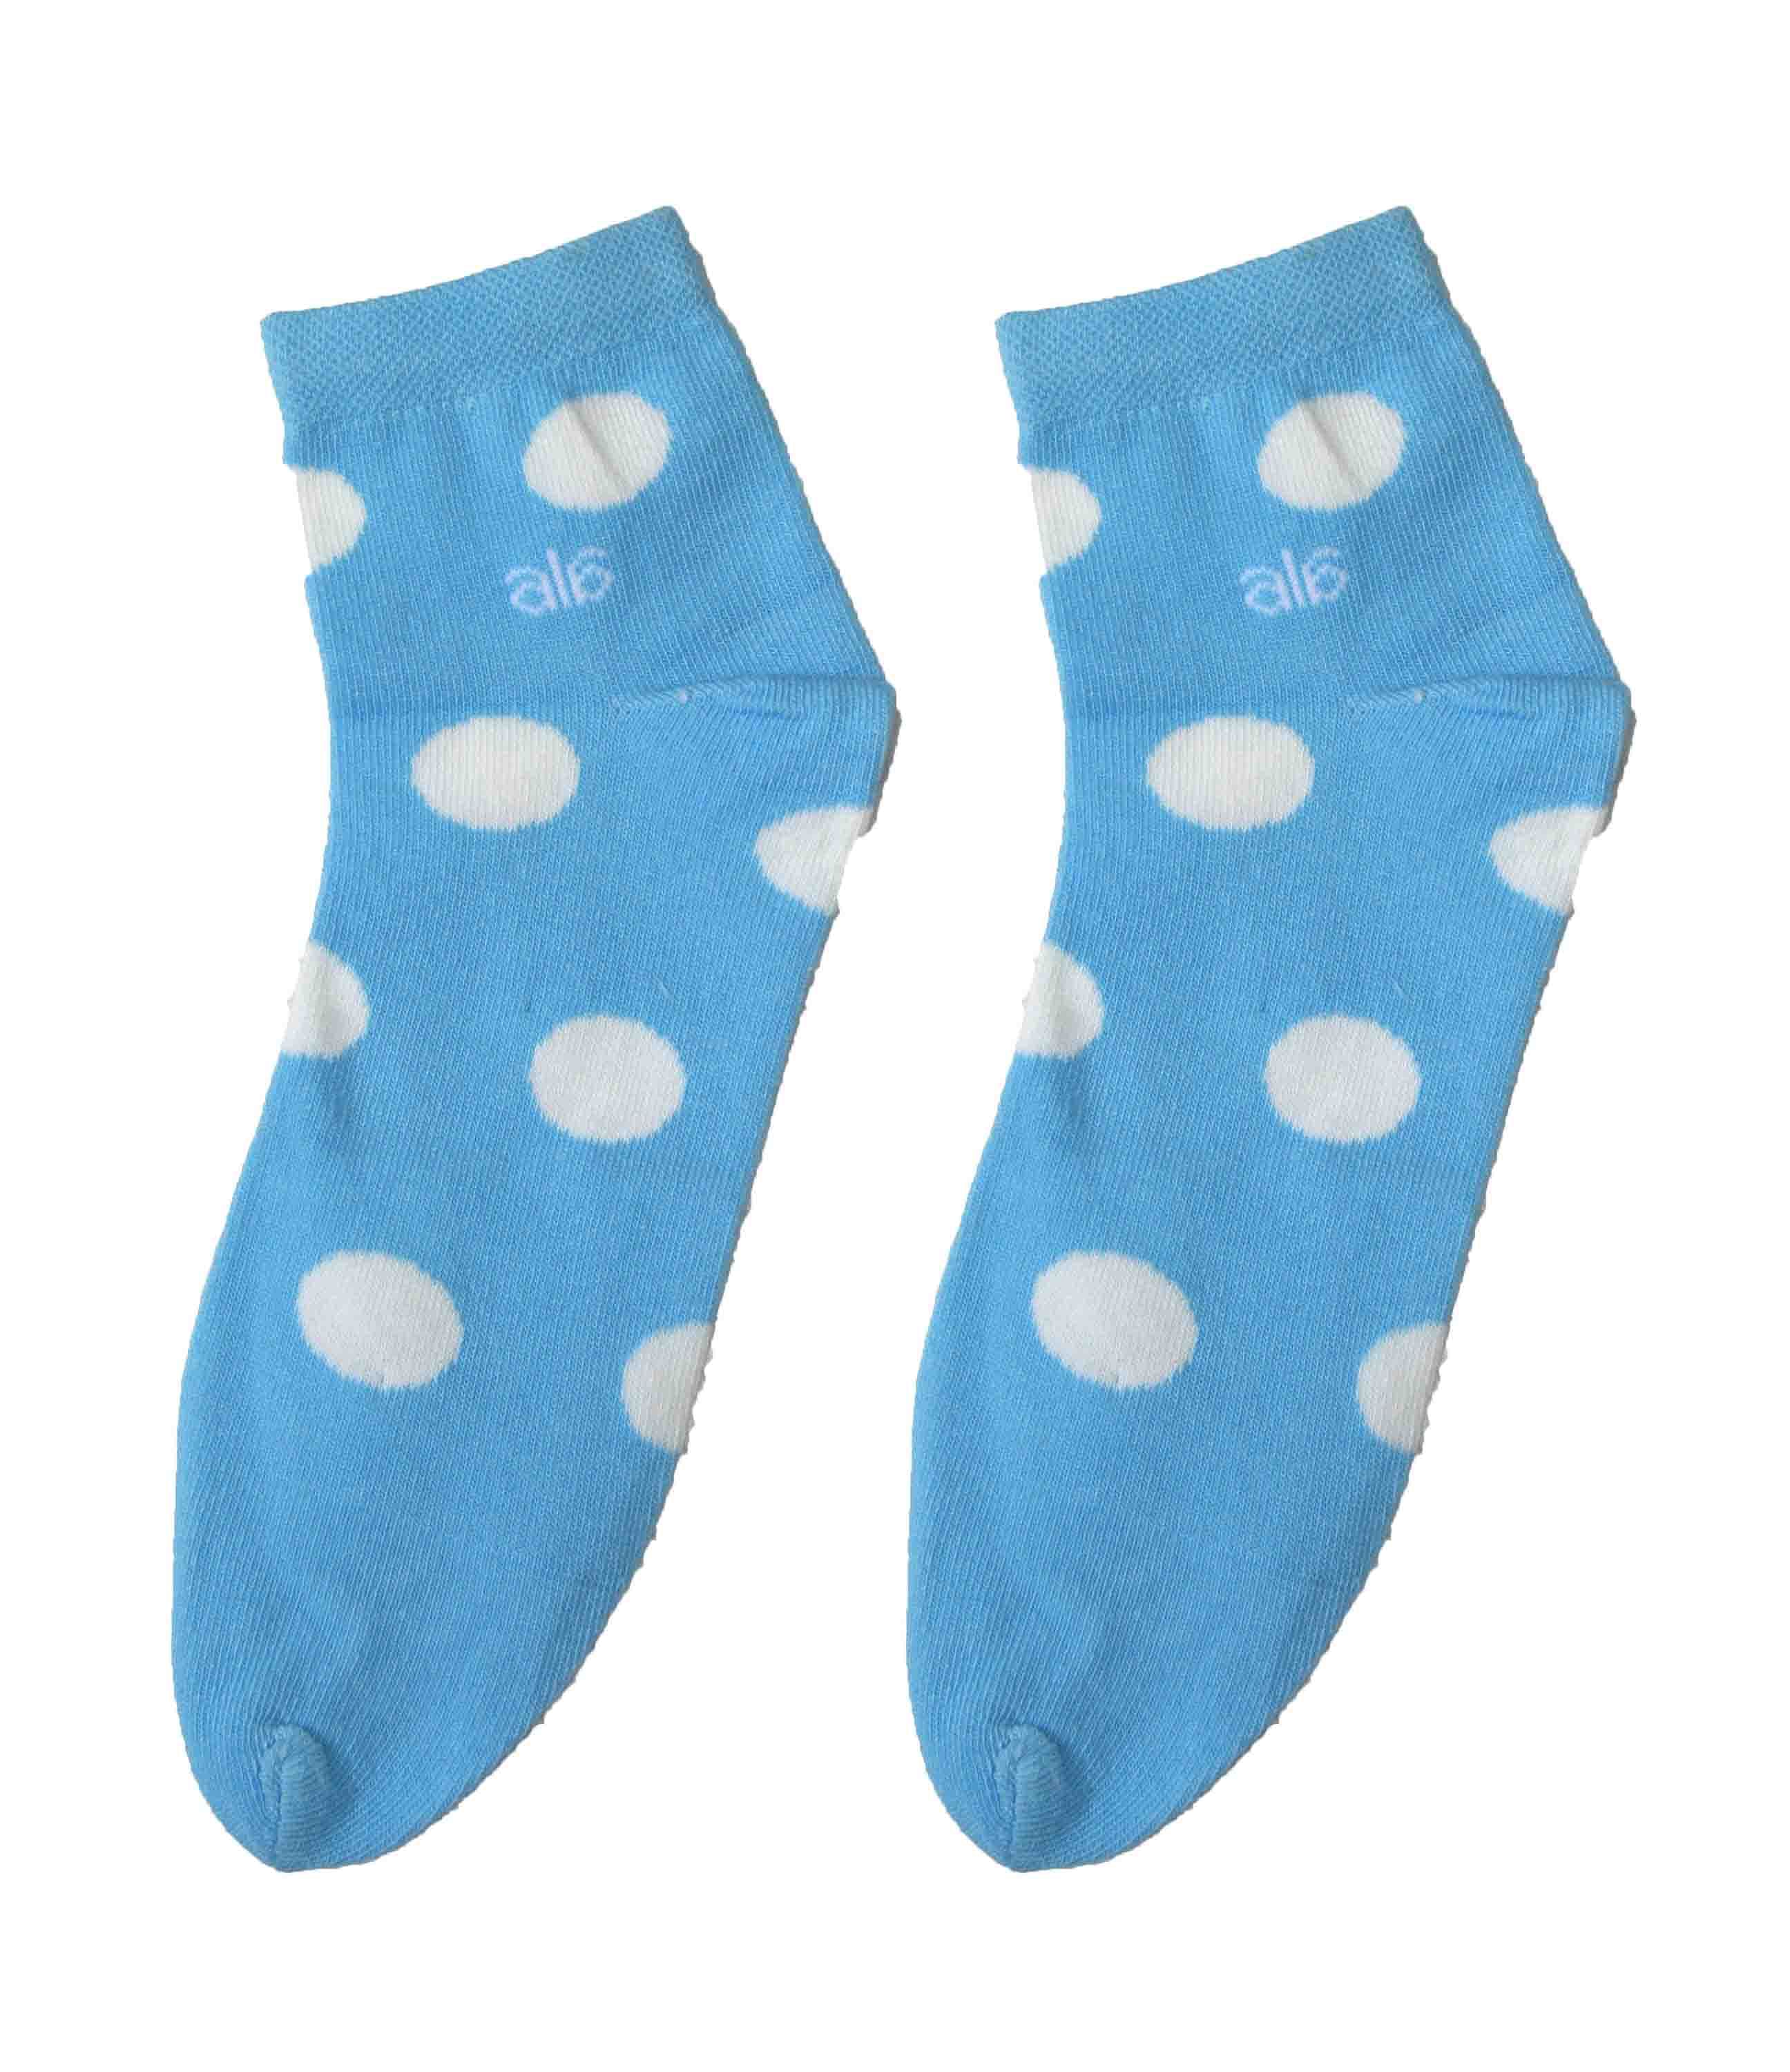 Ellie Wmn ankle Socks - Design-BG-Wmn-DESIGN-006-BLU